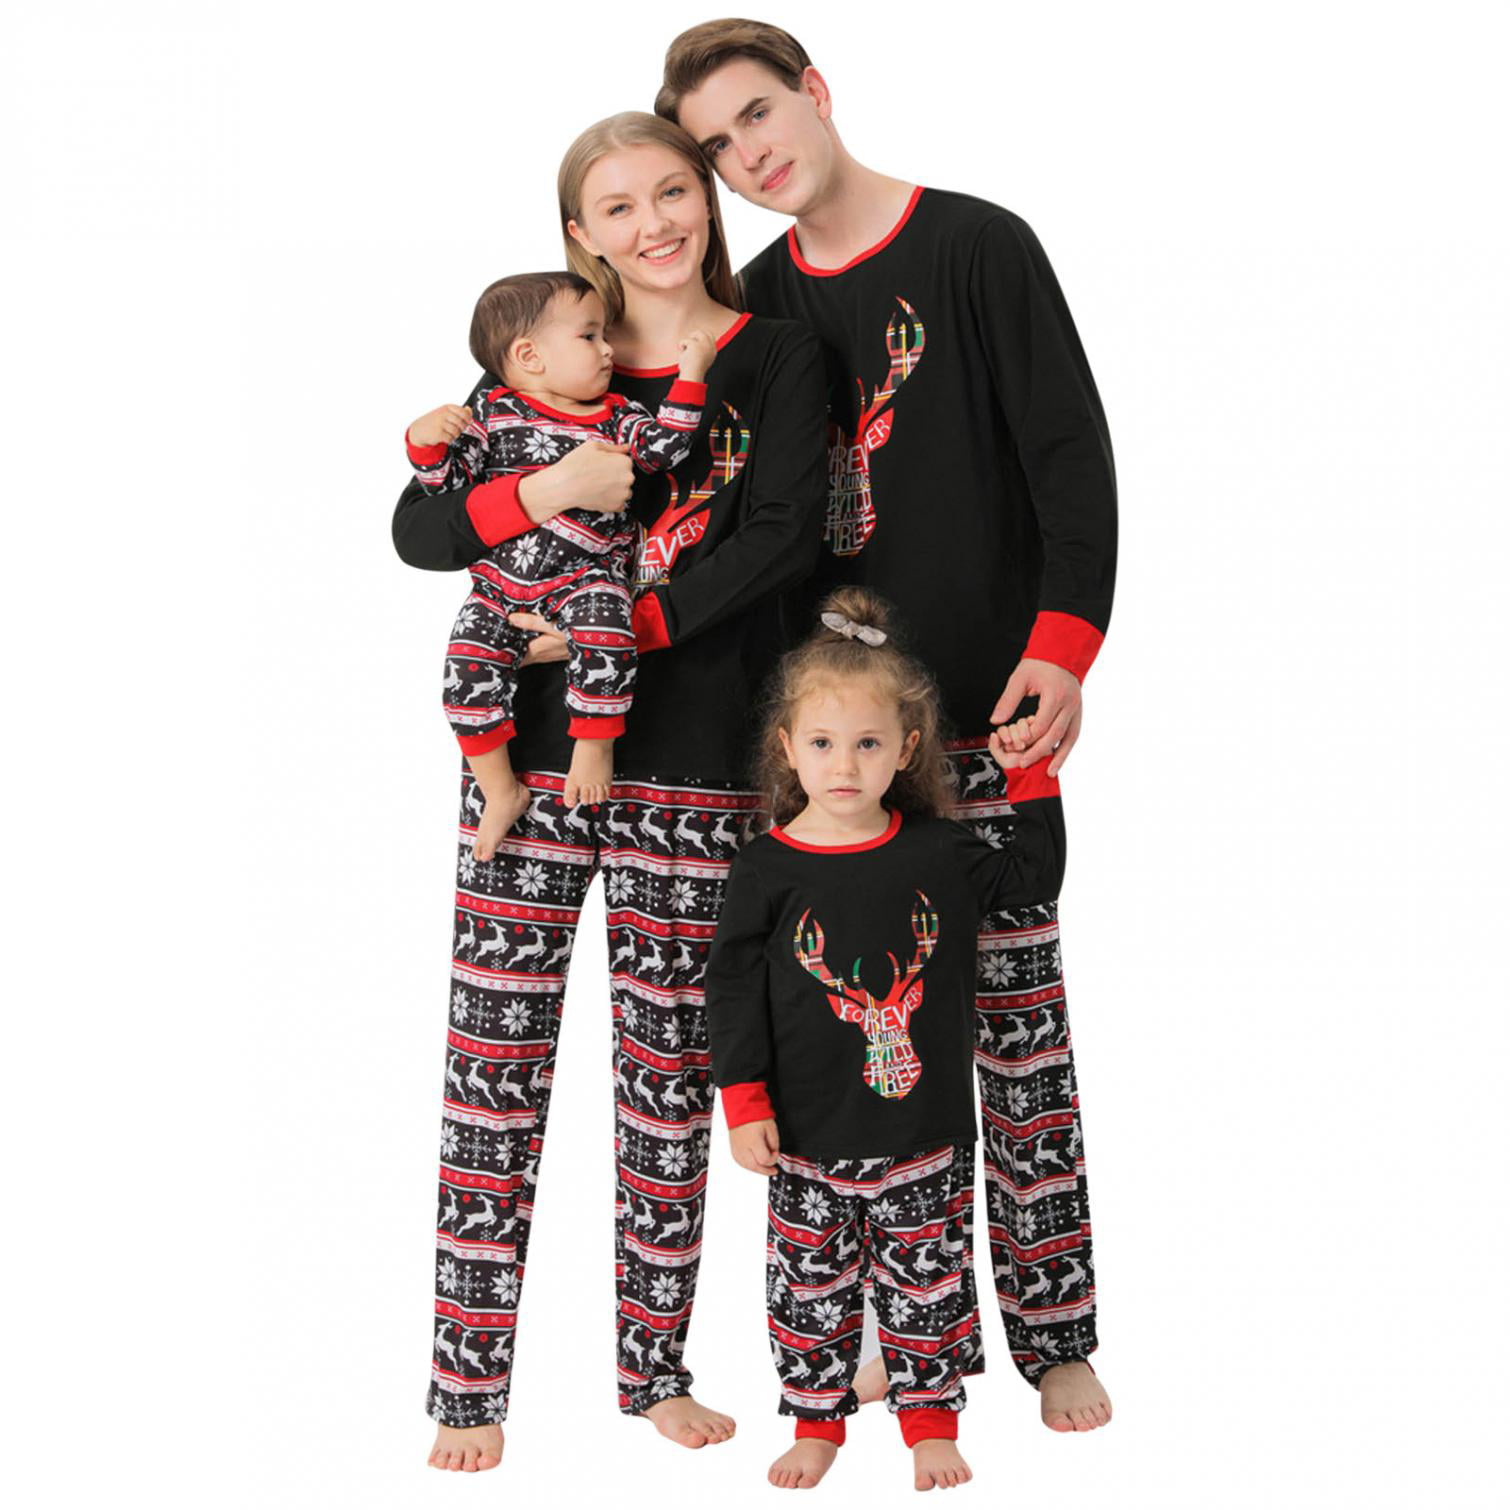 Carters Infant Girls Red Polka Dot Fleece Reindeer Christmas Sleeper Pajama 6m